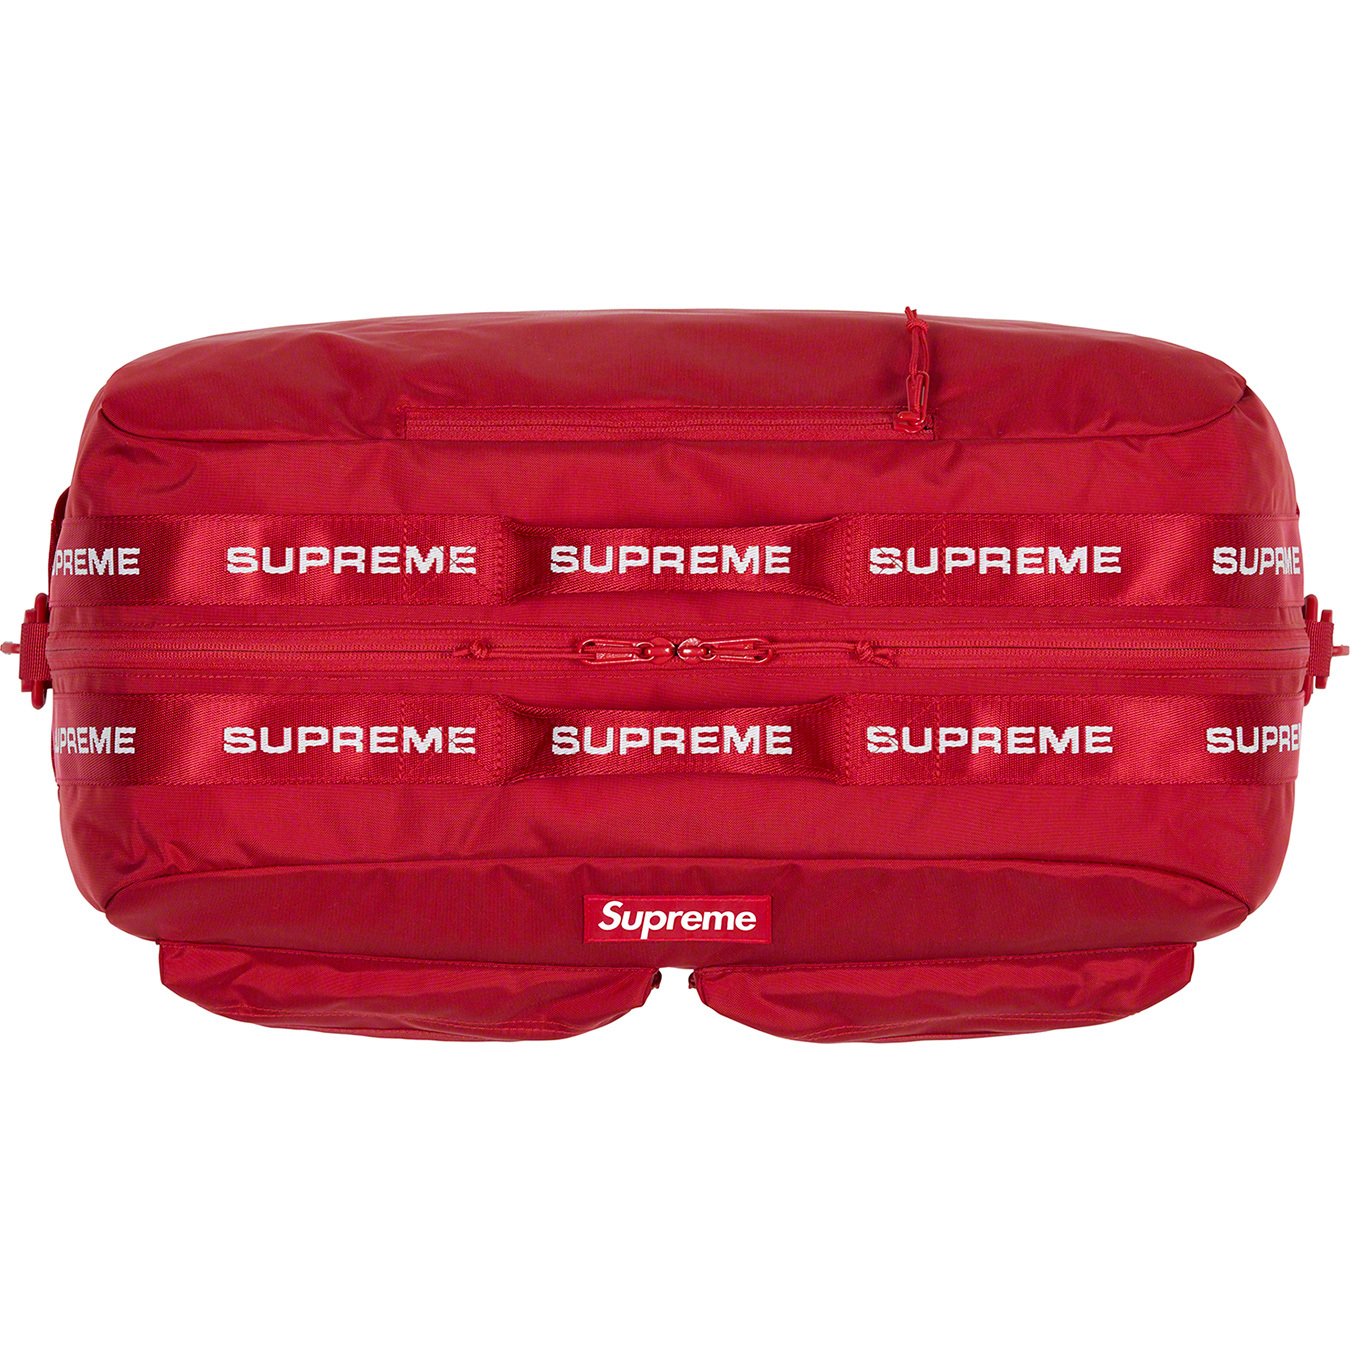 Supreme Duffle Bag Red - FW17 - US